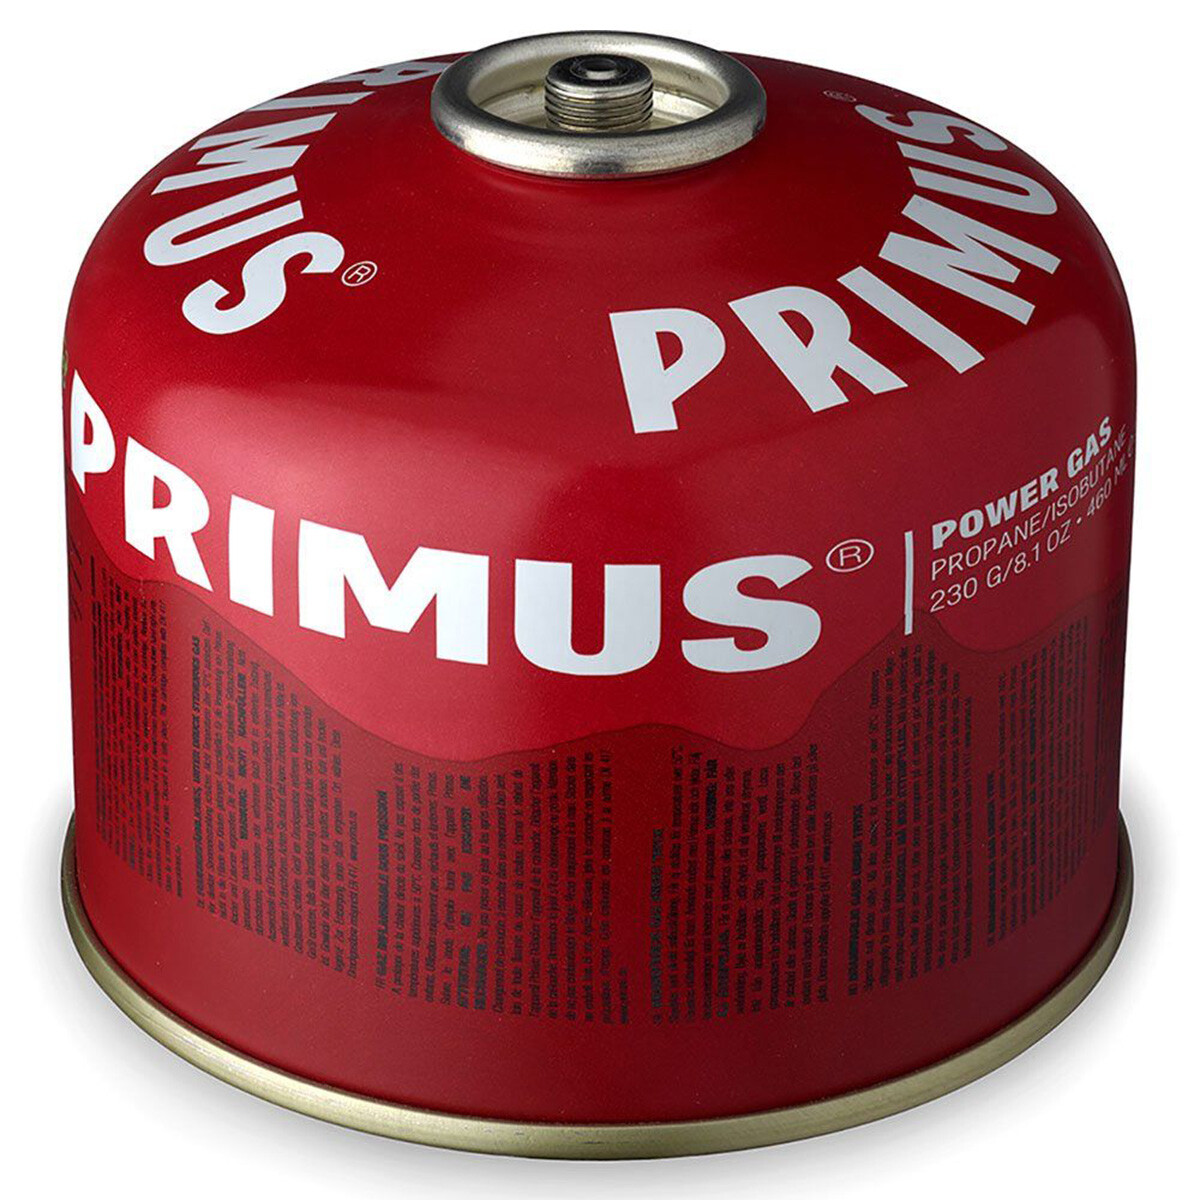 Se Primus Power Gas 230g L2 hos Specialbutikken